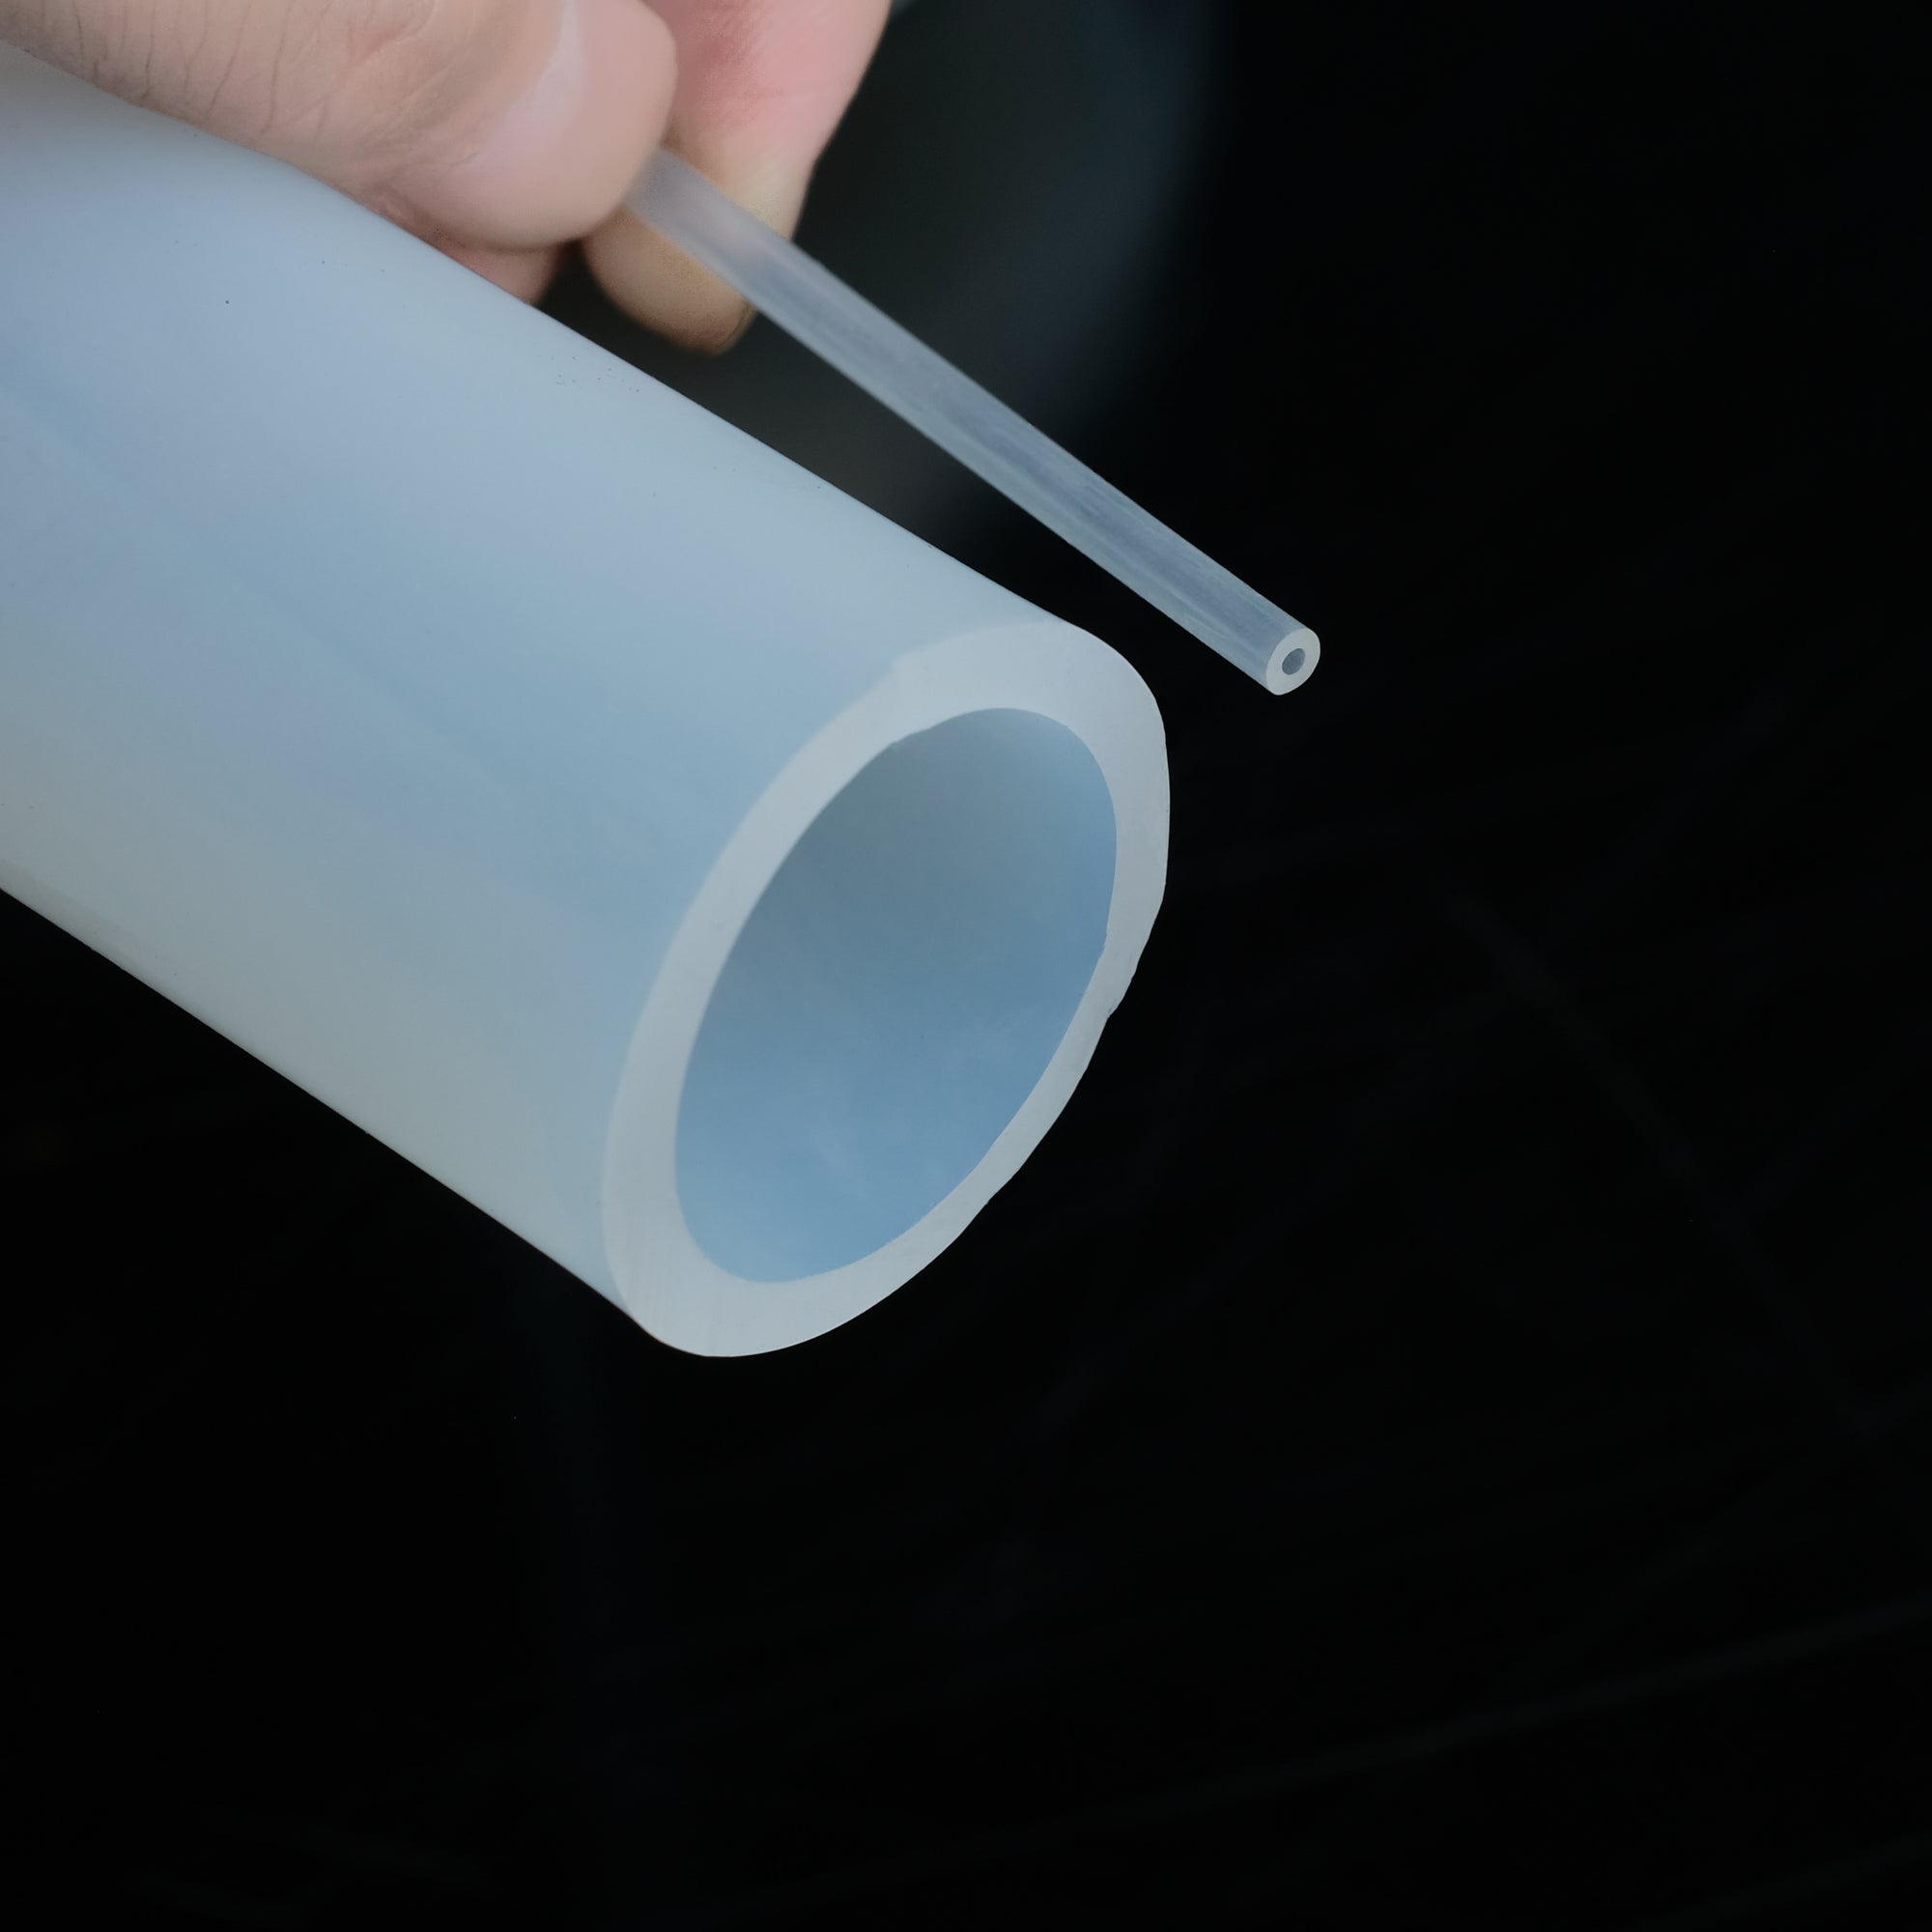 Translucent Silicone Rubber Tubing